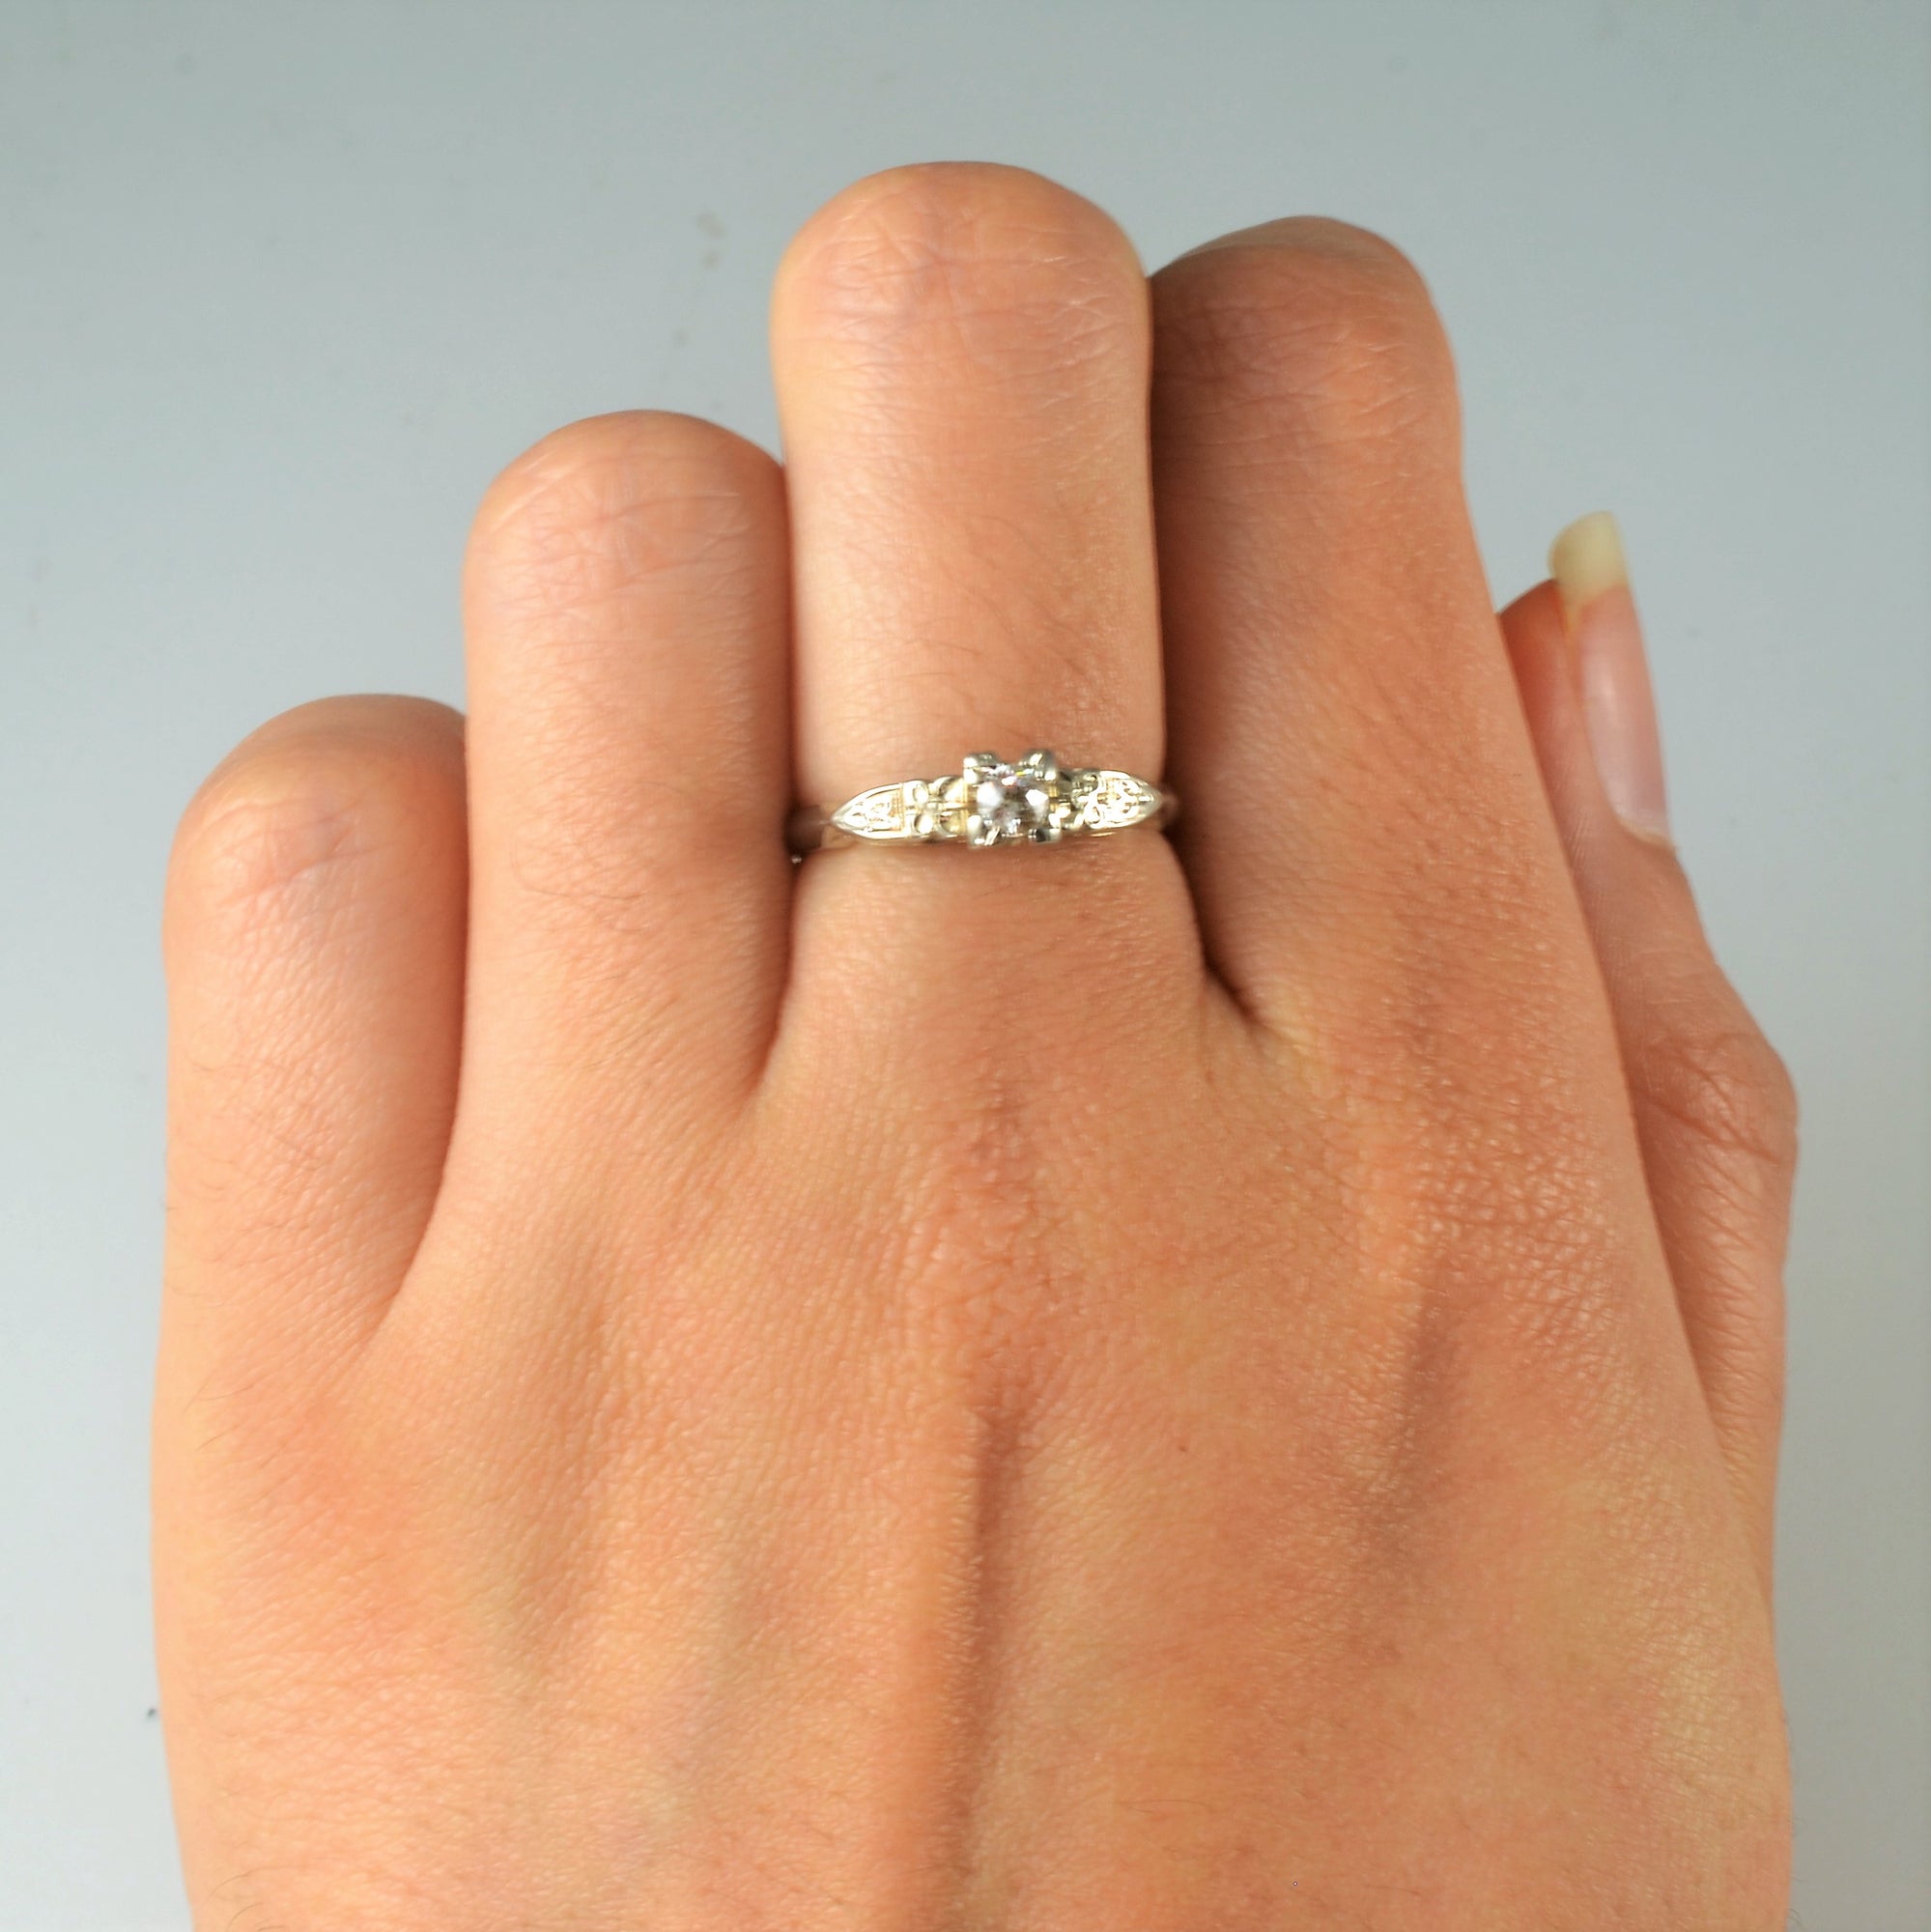 1920s Blossom Patterned Diamond Ring | 0.19ct | SZ 6.5 |